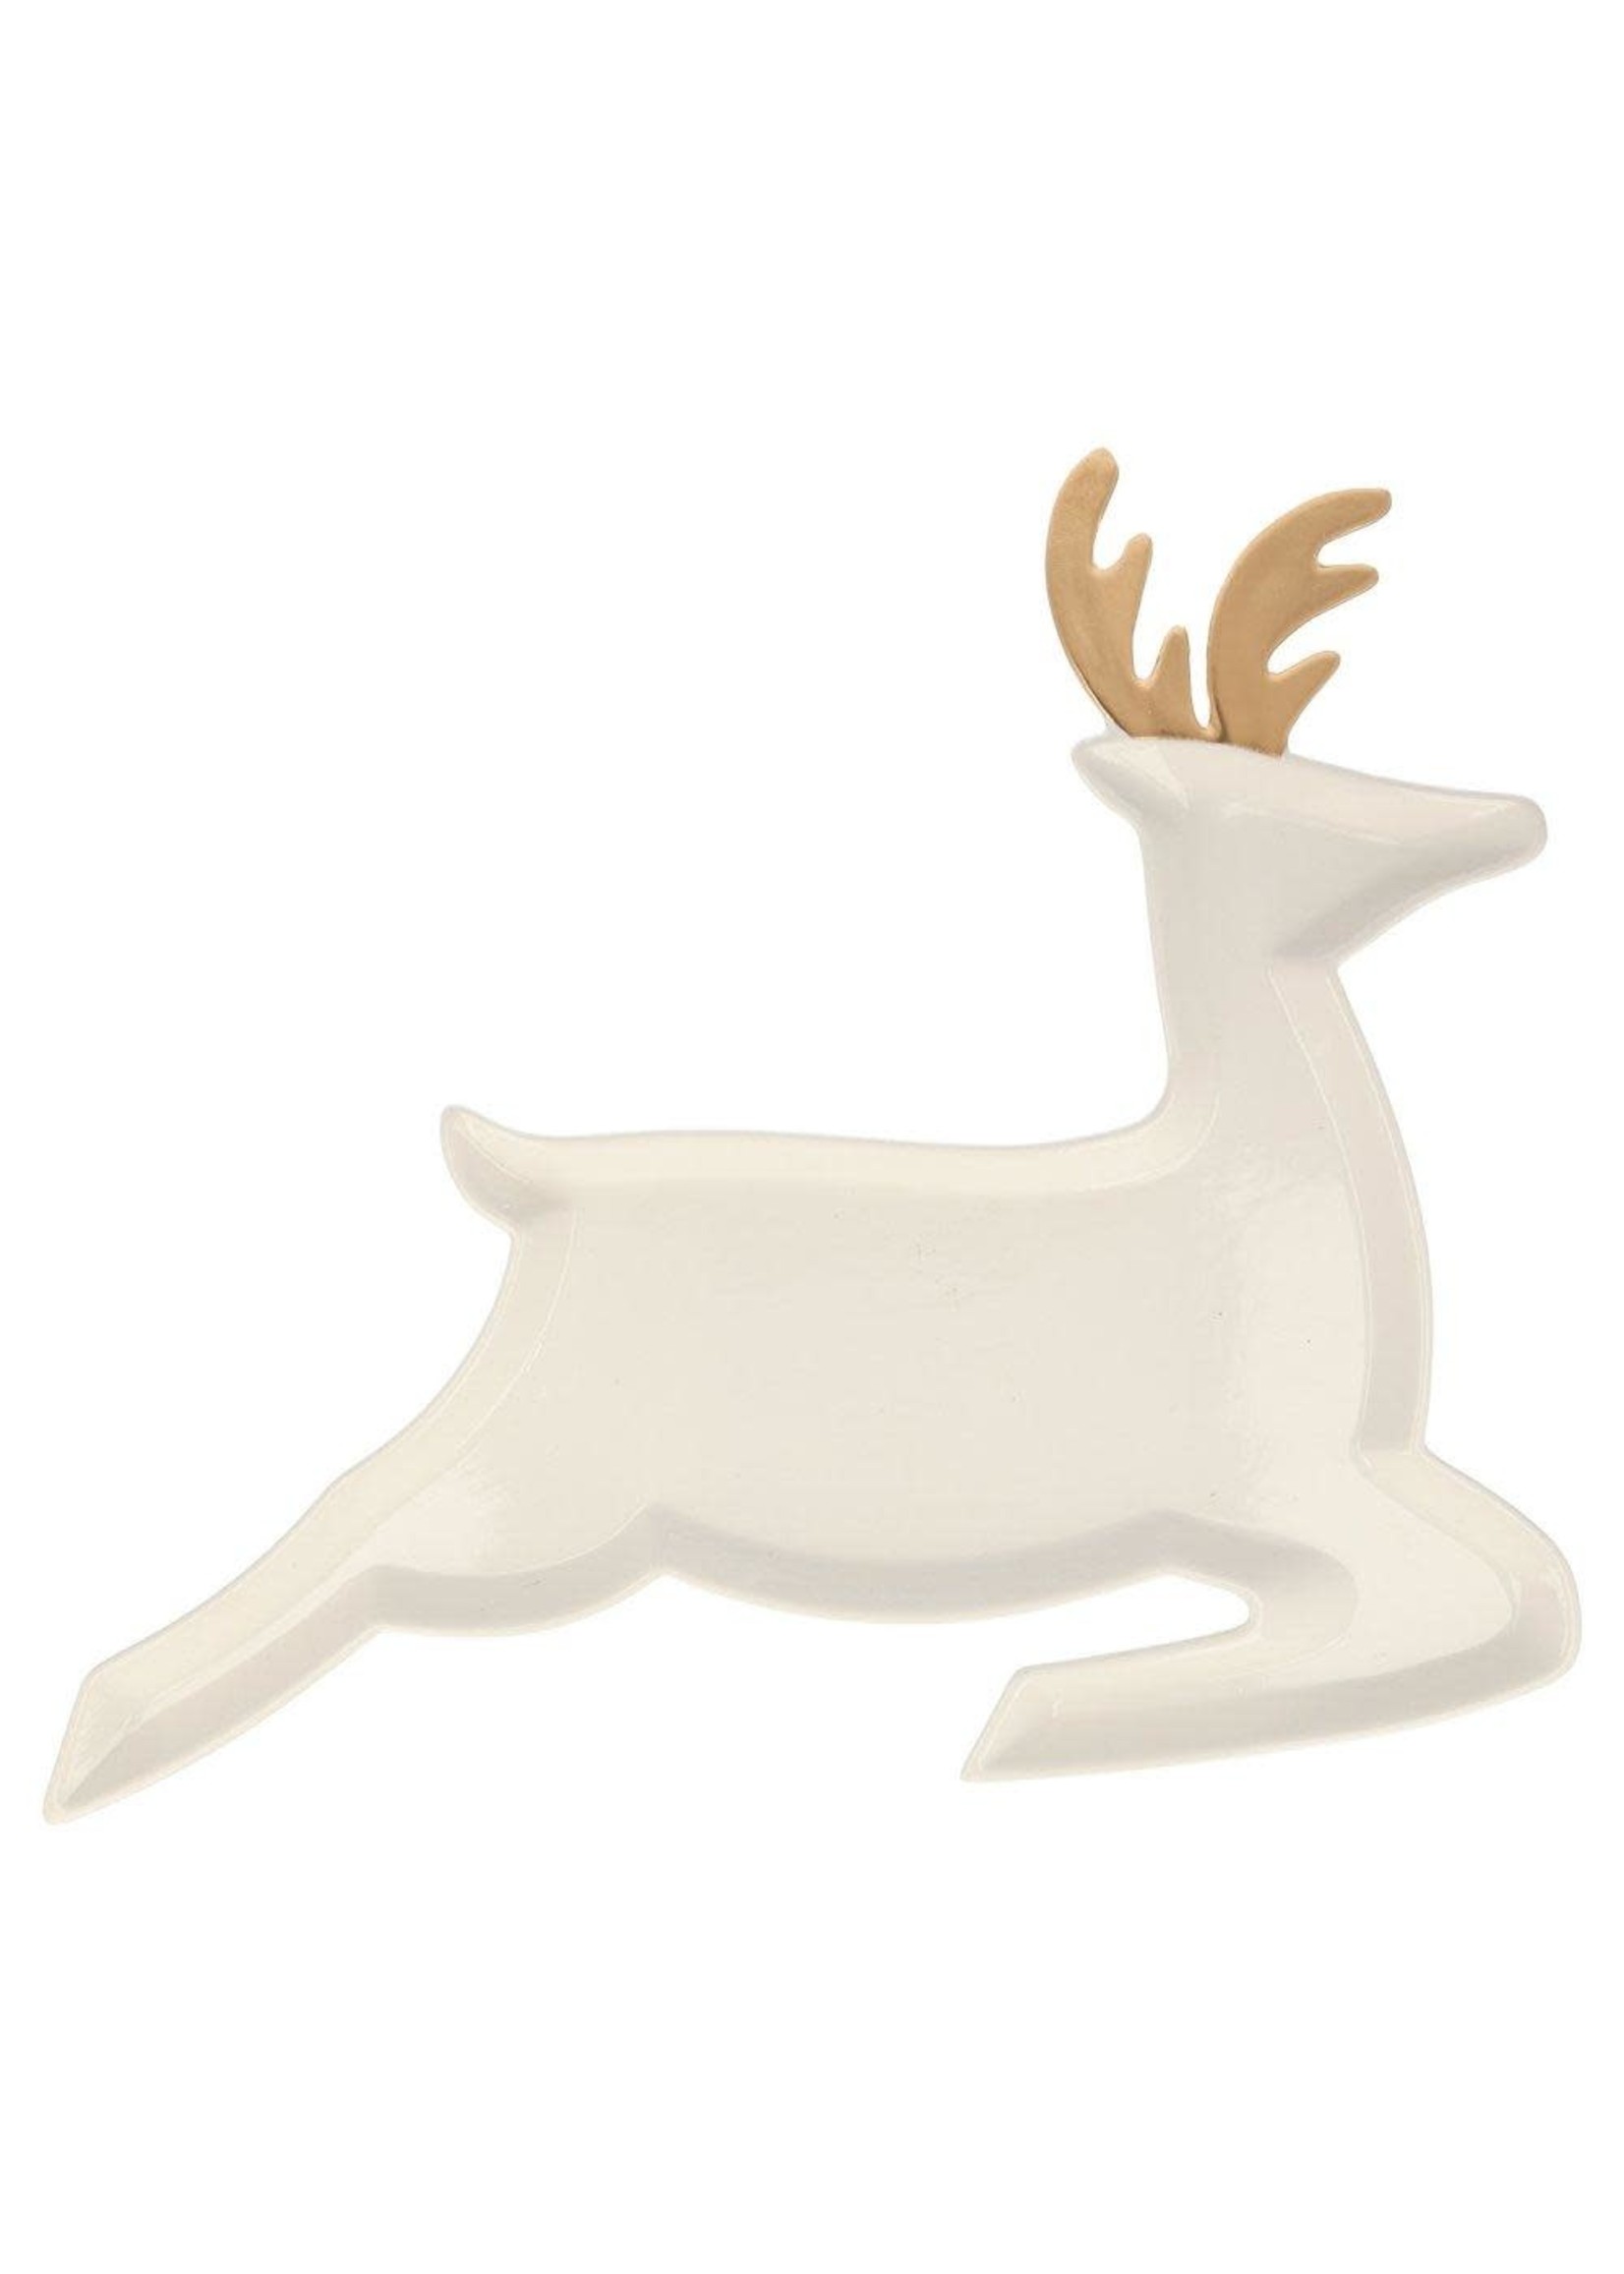 Meri Meri Plates - Reindeer (set of 2)